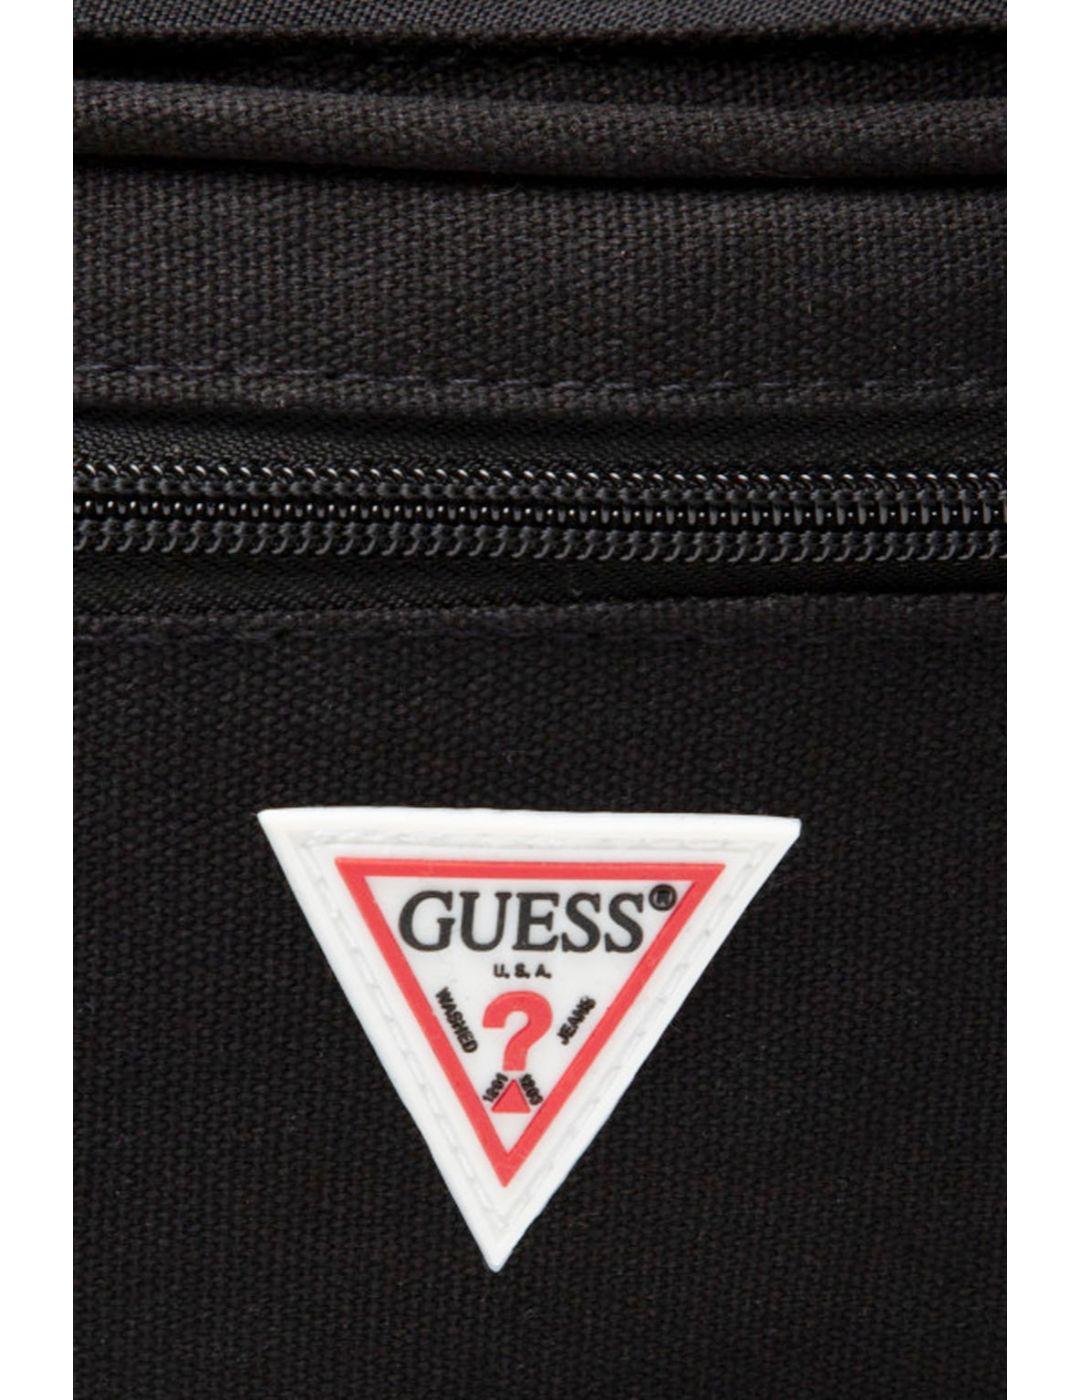 Riñonera Guess Logo negra tela para hombre -b